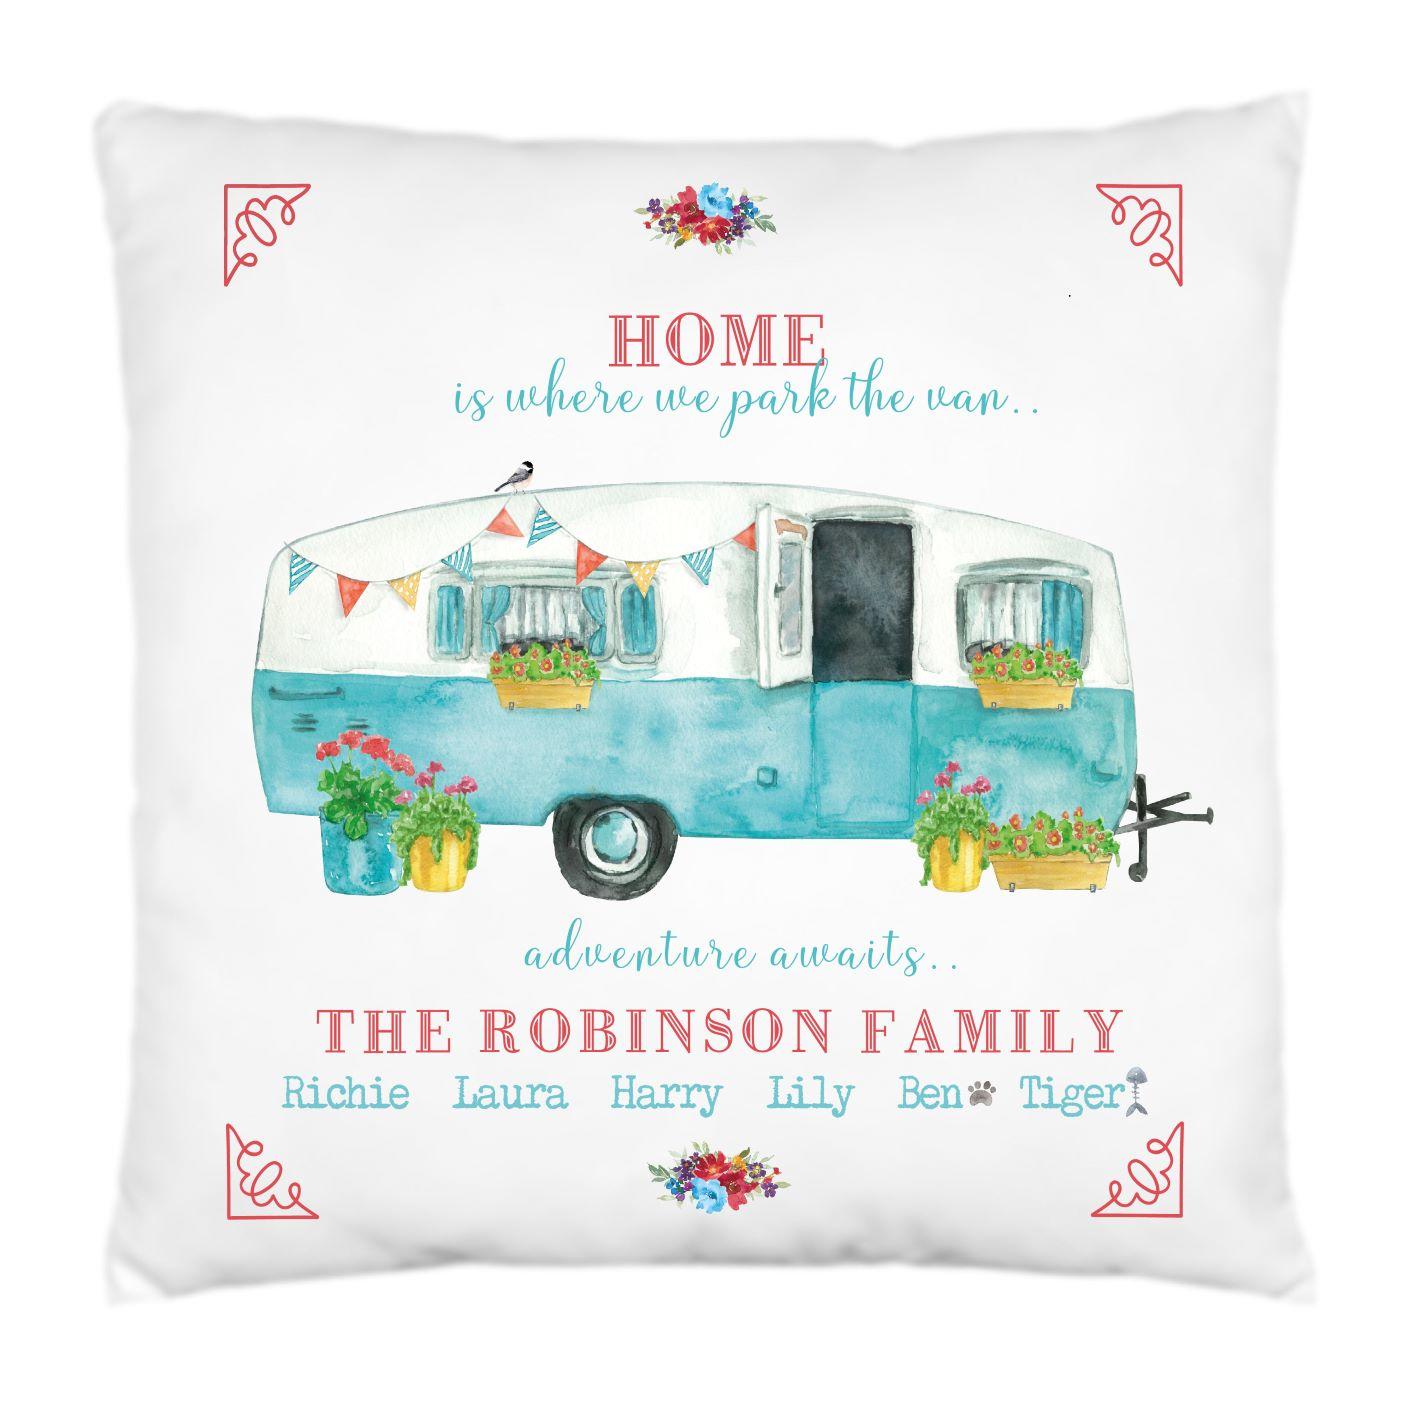 Personalised Caravan Cushion,Pillow,Family Caravan and Camping Holidays,Home Decor,40cms Square